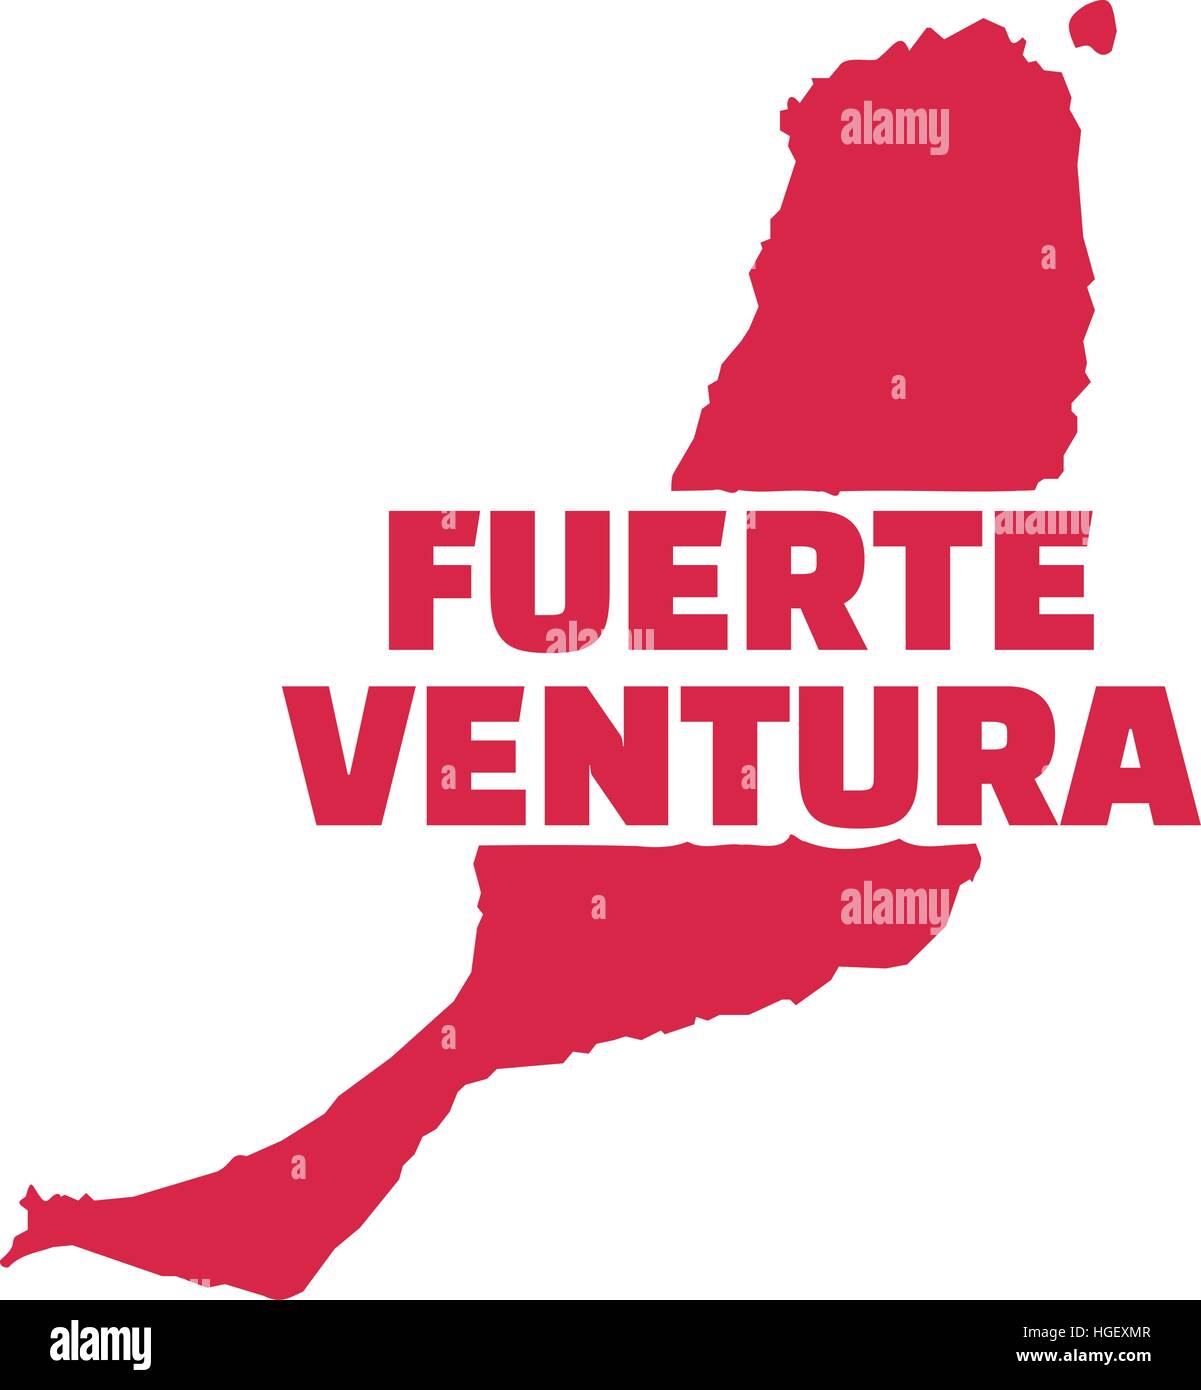 Fuerteventura map with name Stock Vector